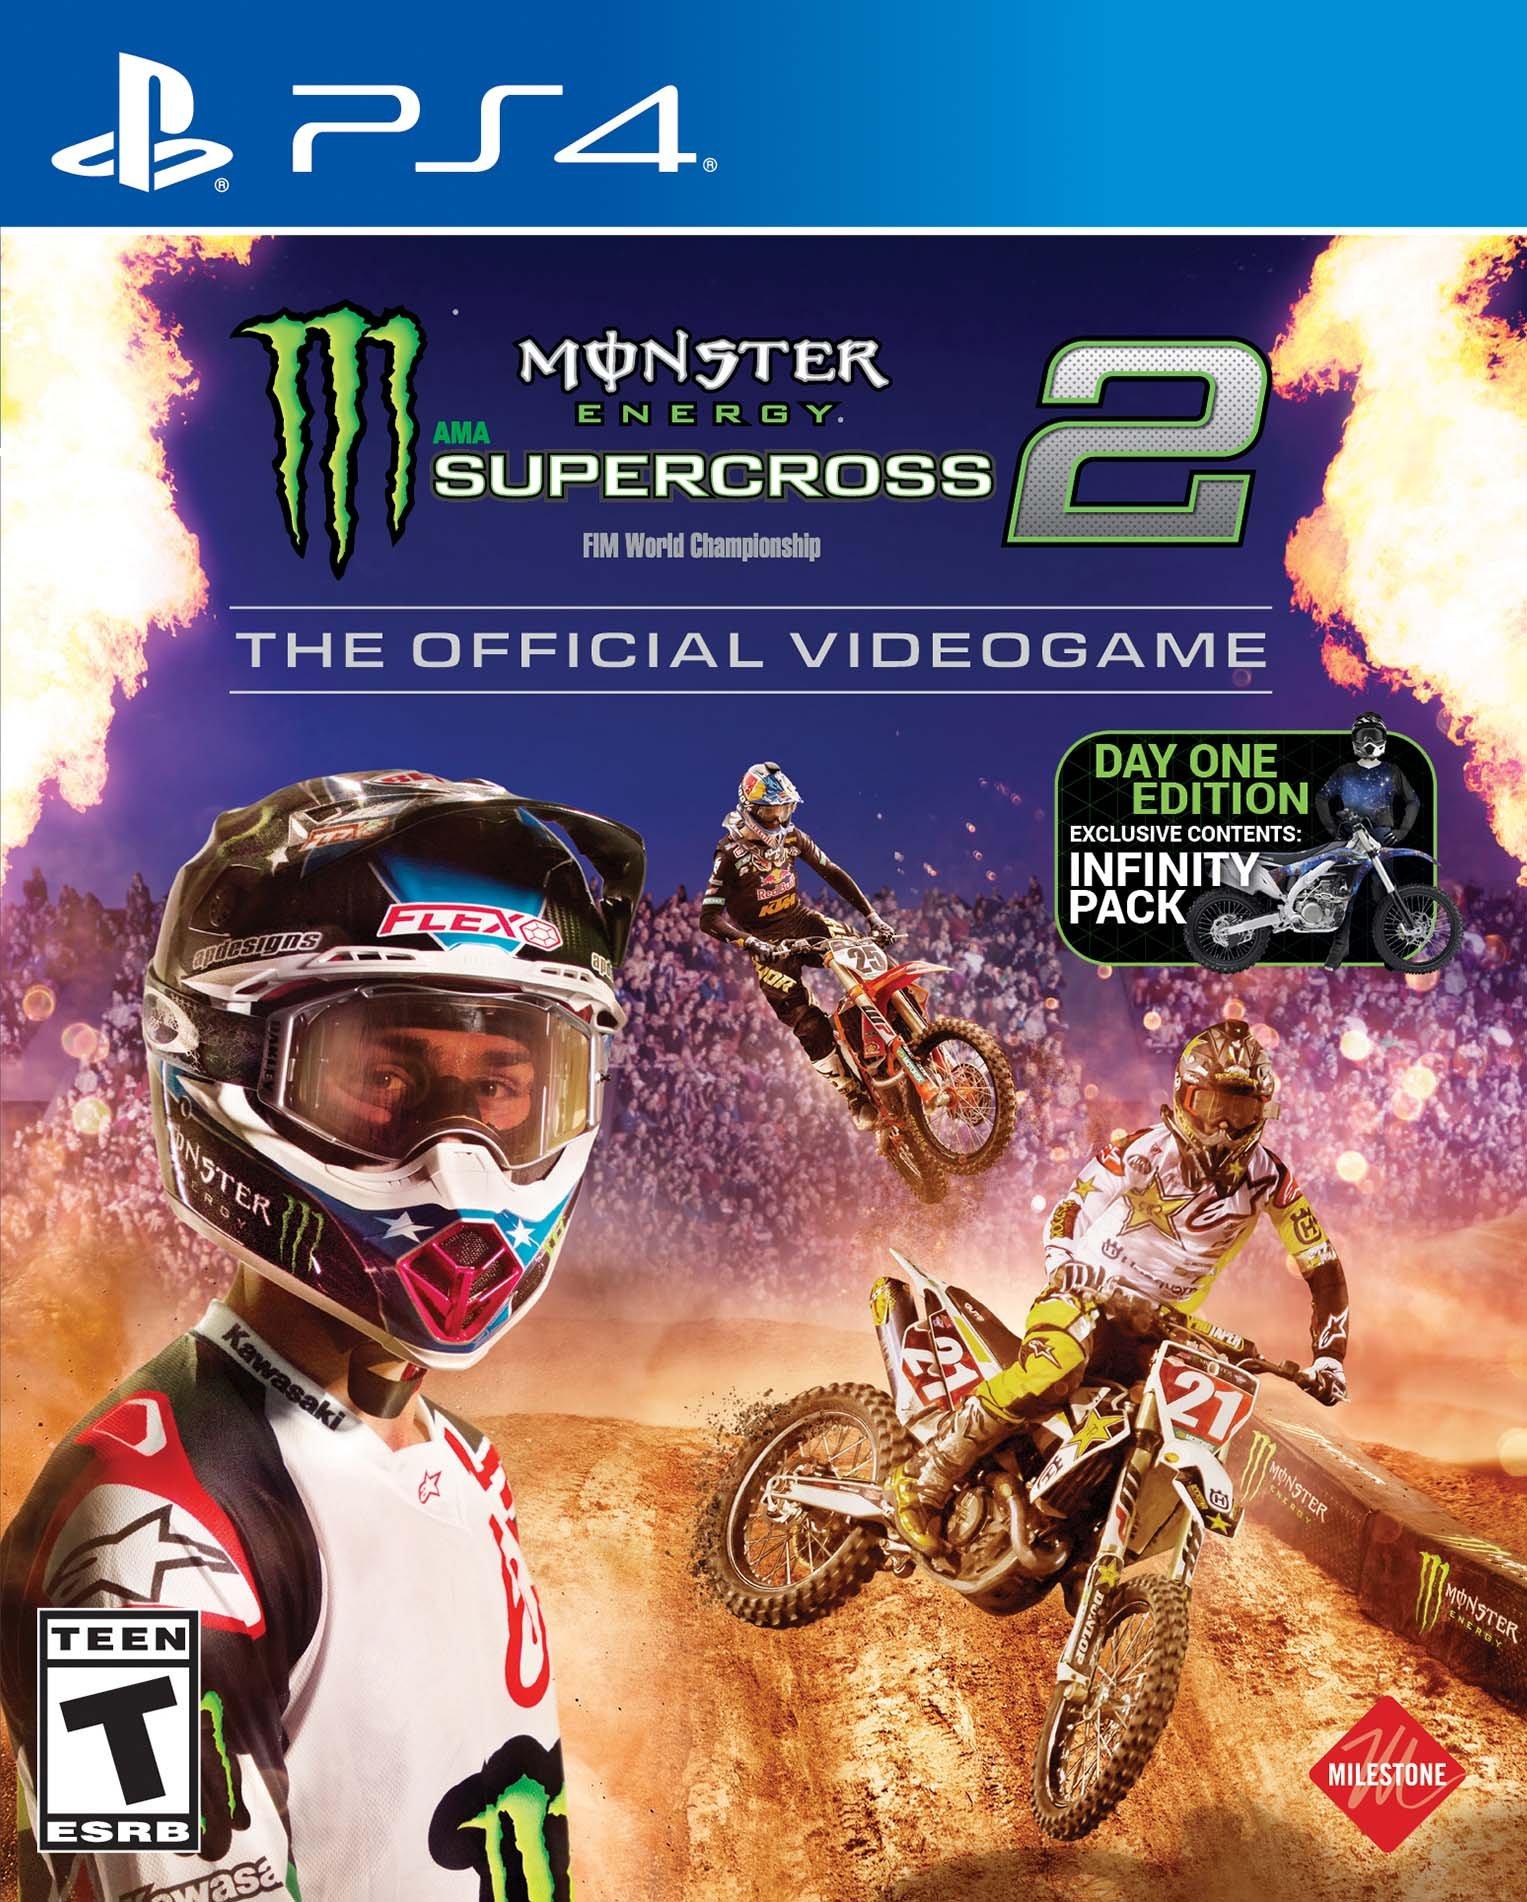 Monster Energy Supercross 2 The Official Videogame PS4 - Fenix GZ - 16 anos  no mercado!